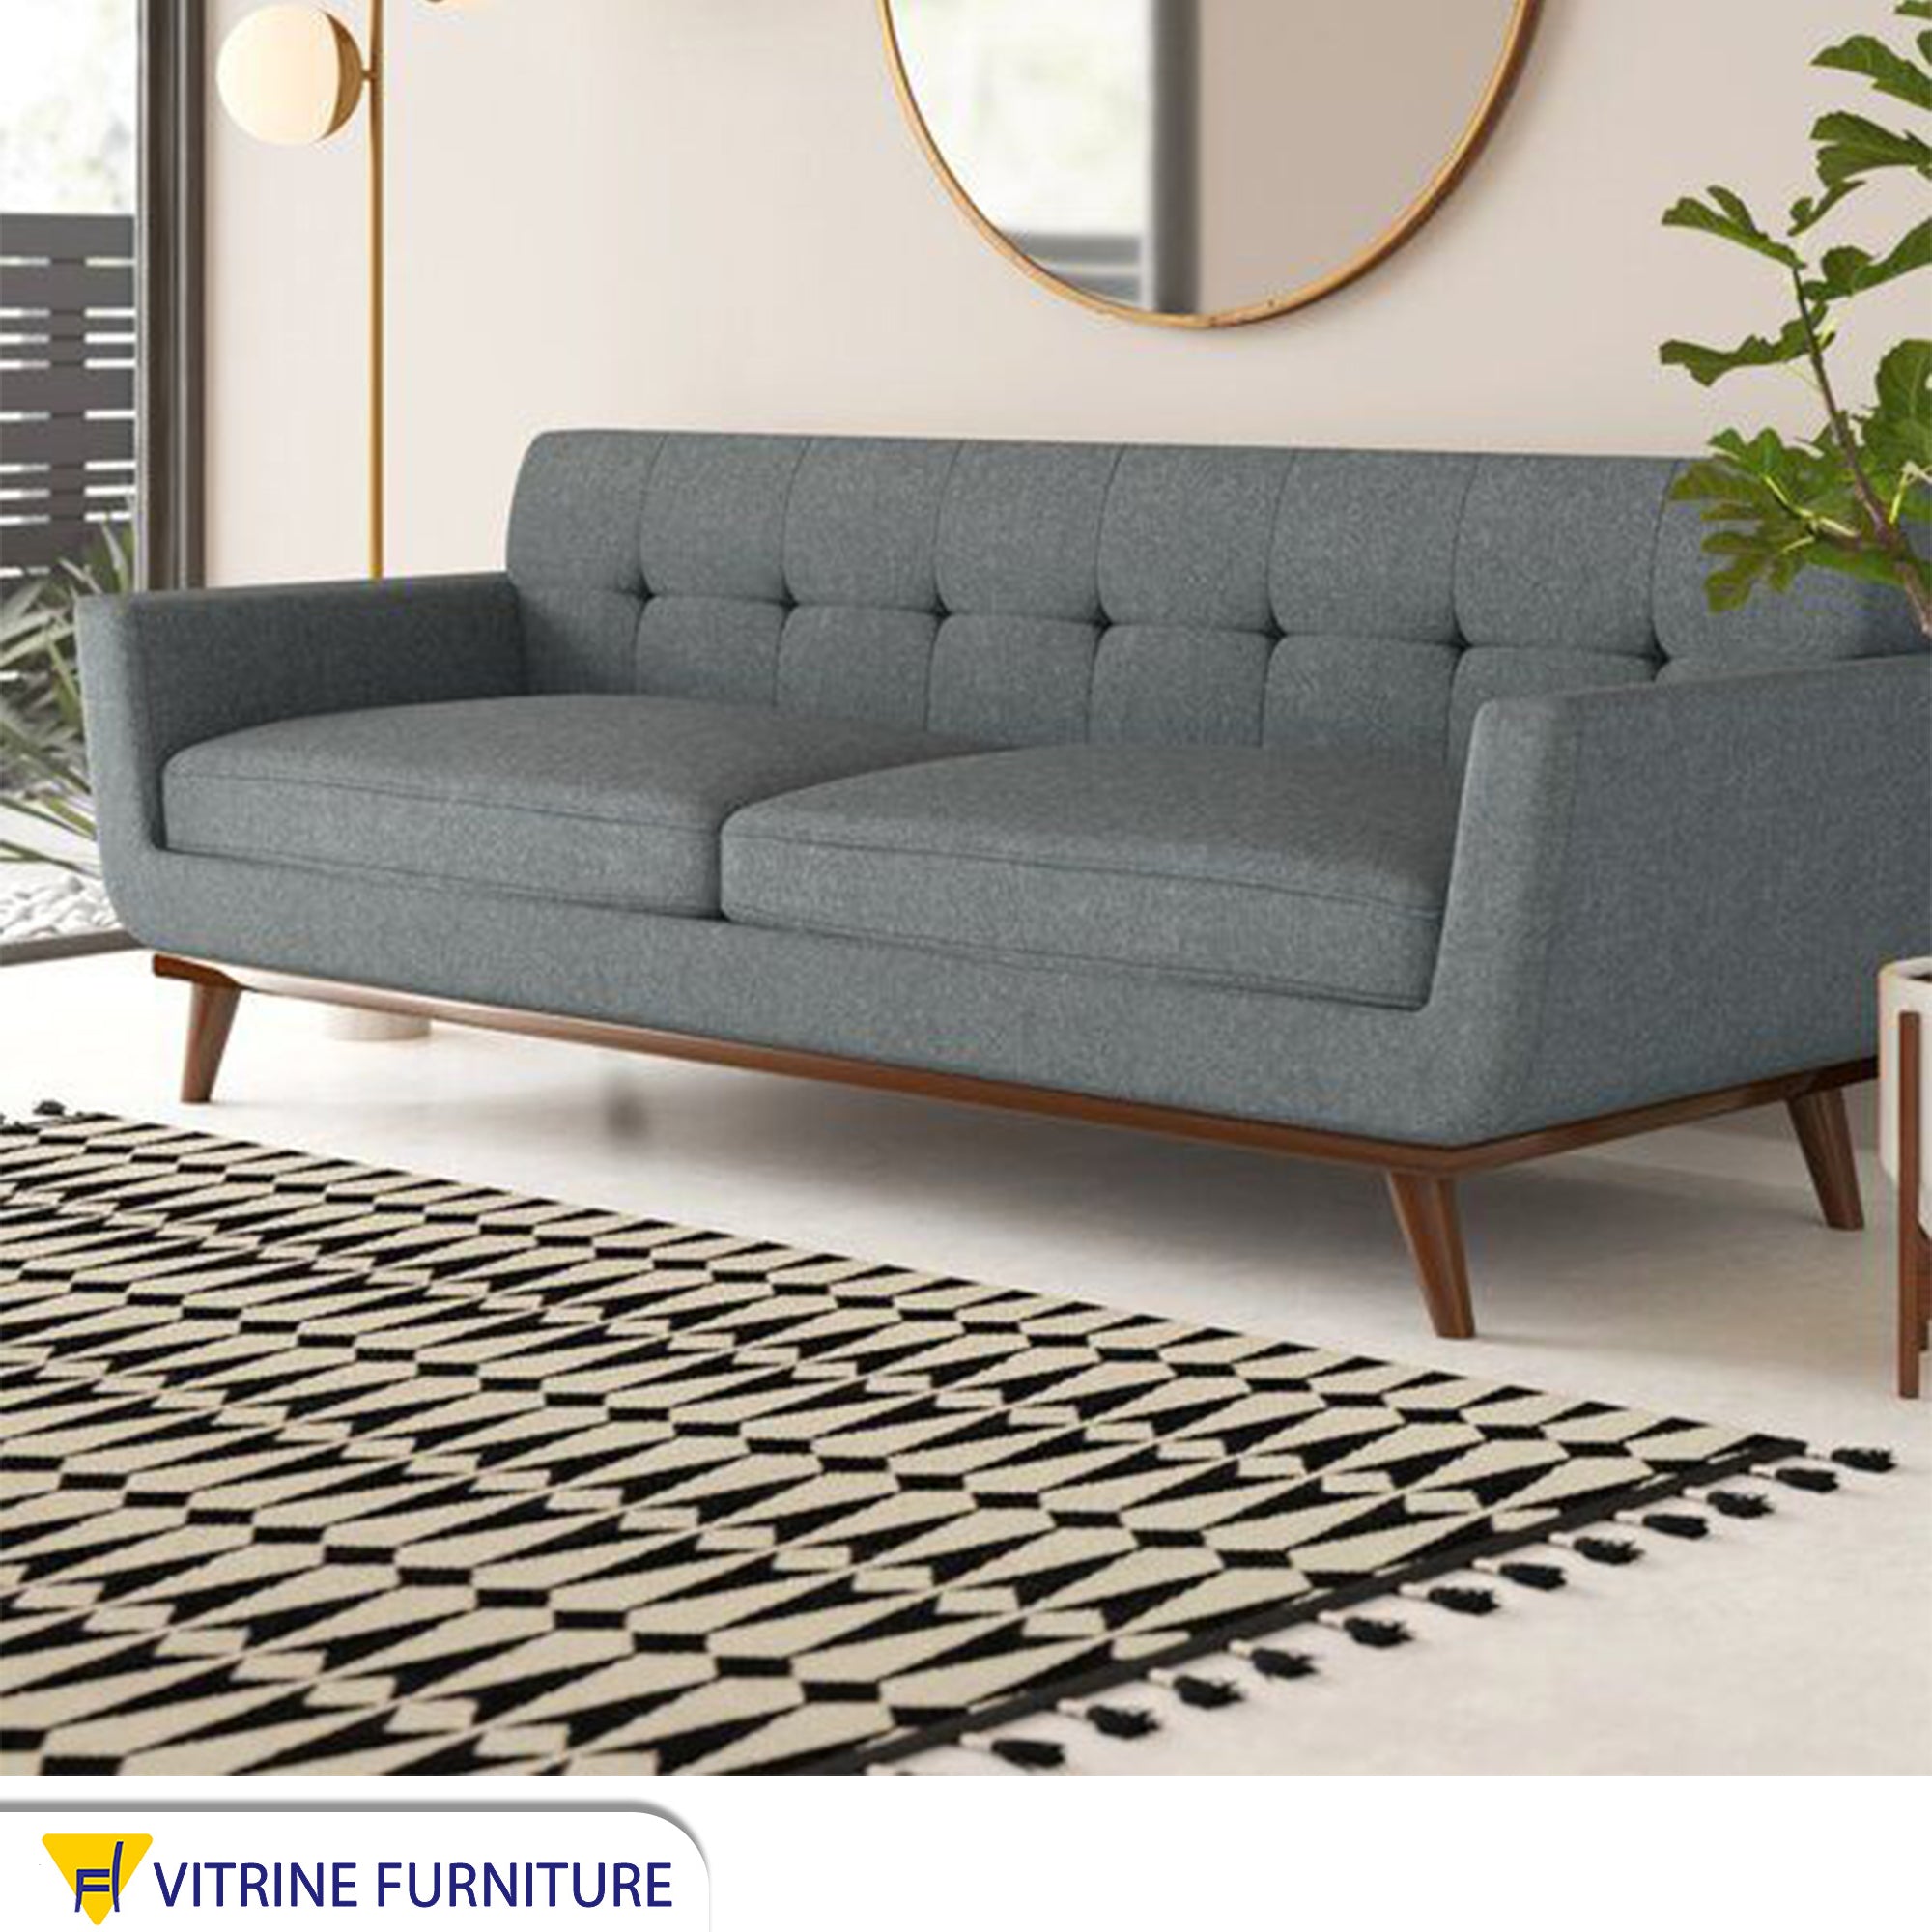 Gray sofa with slanted legs